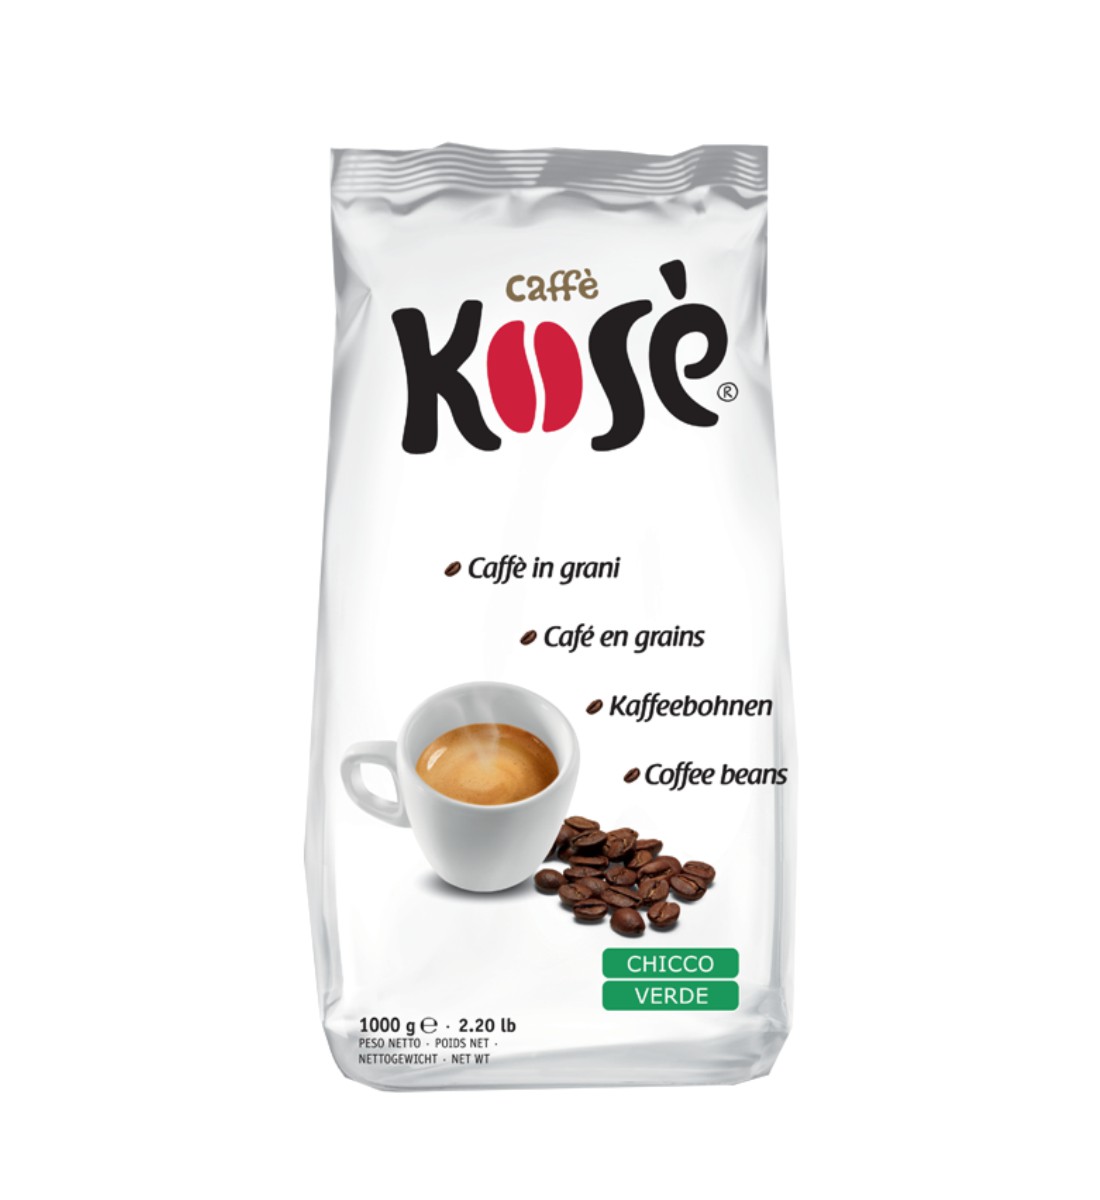 Kimbo Caffe Kose Chicco Verde cafea boabe 1 kg